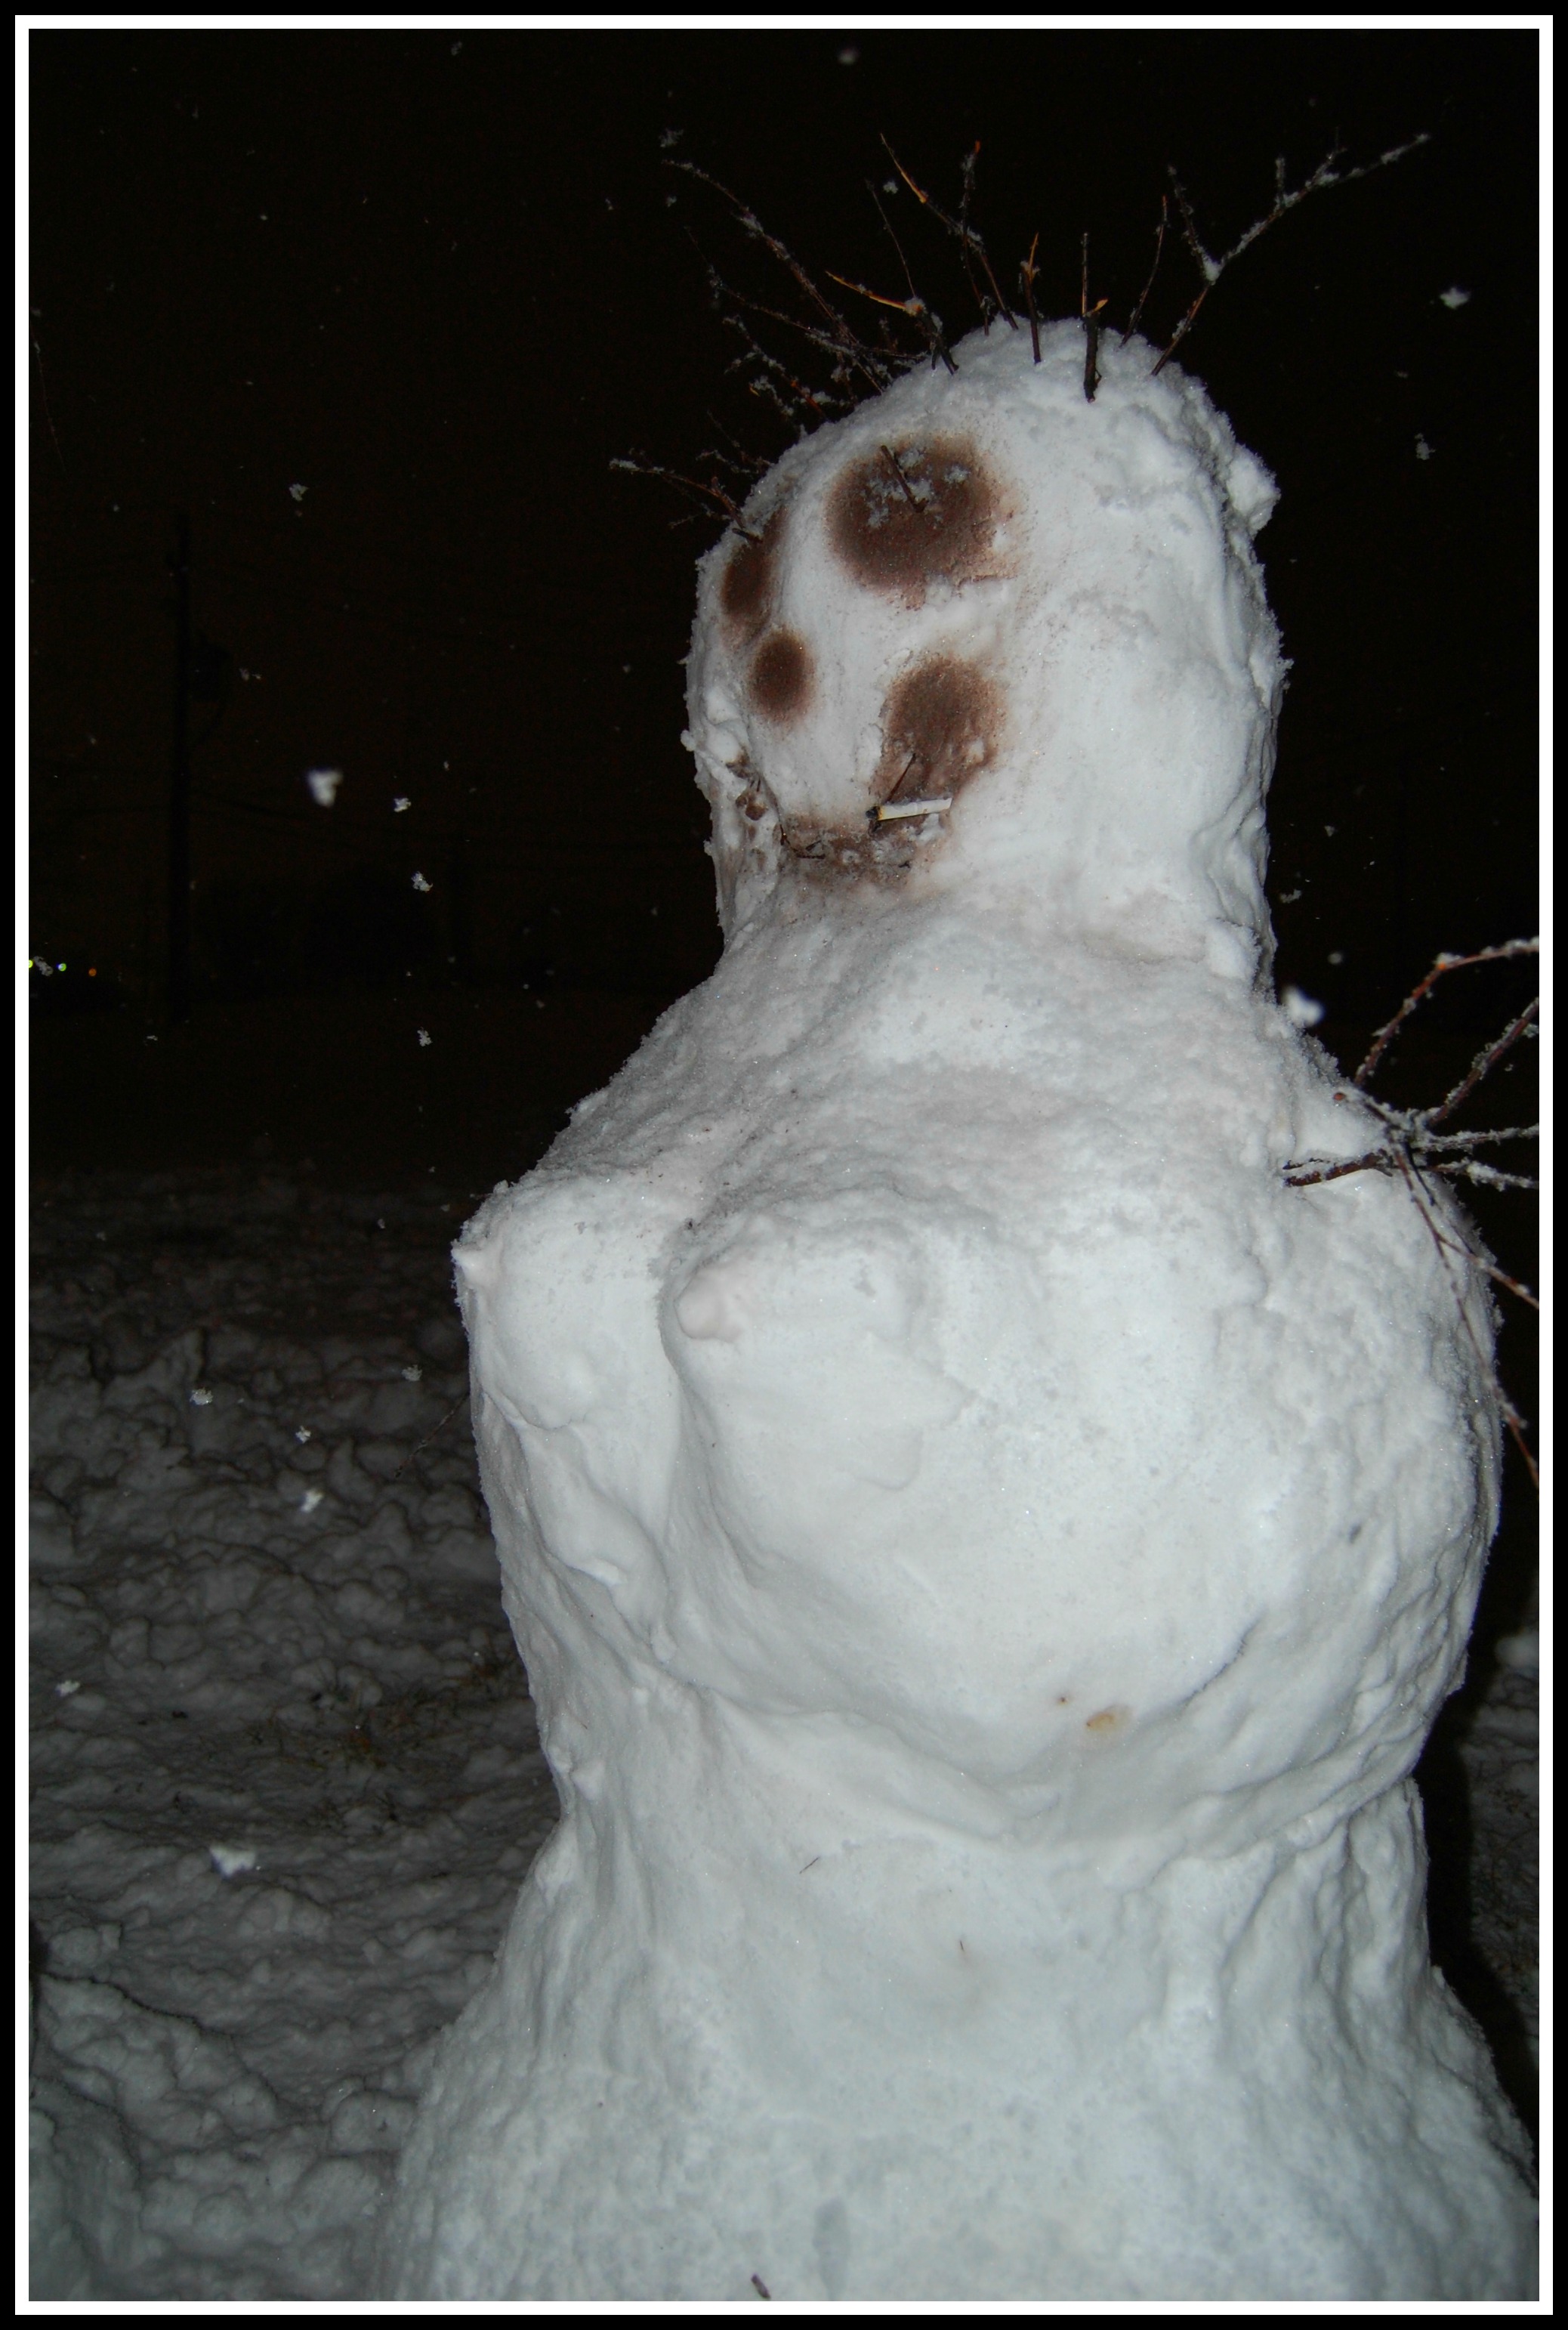 snow-woman-with-boobies.jpg